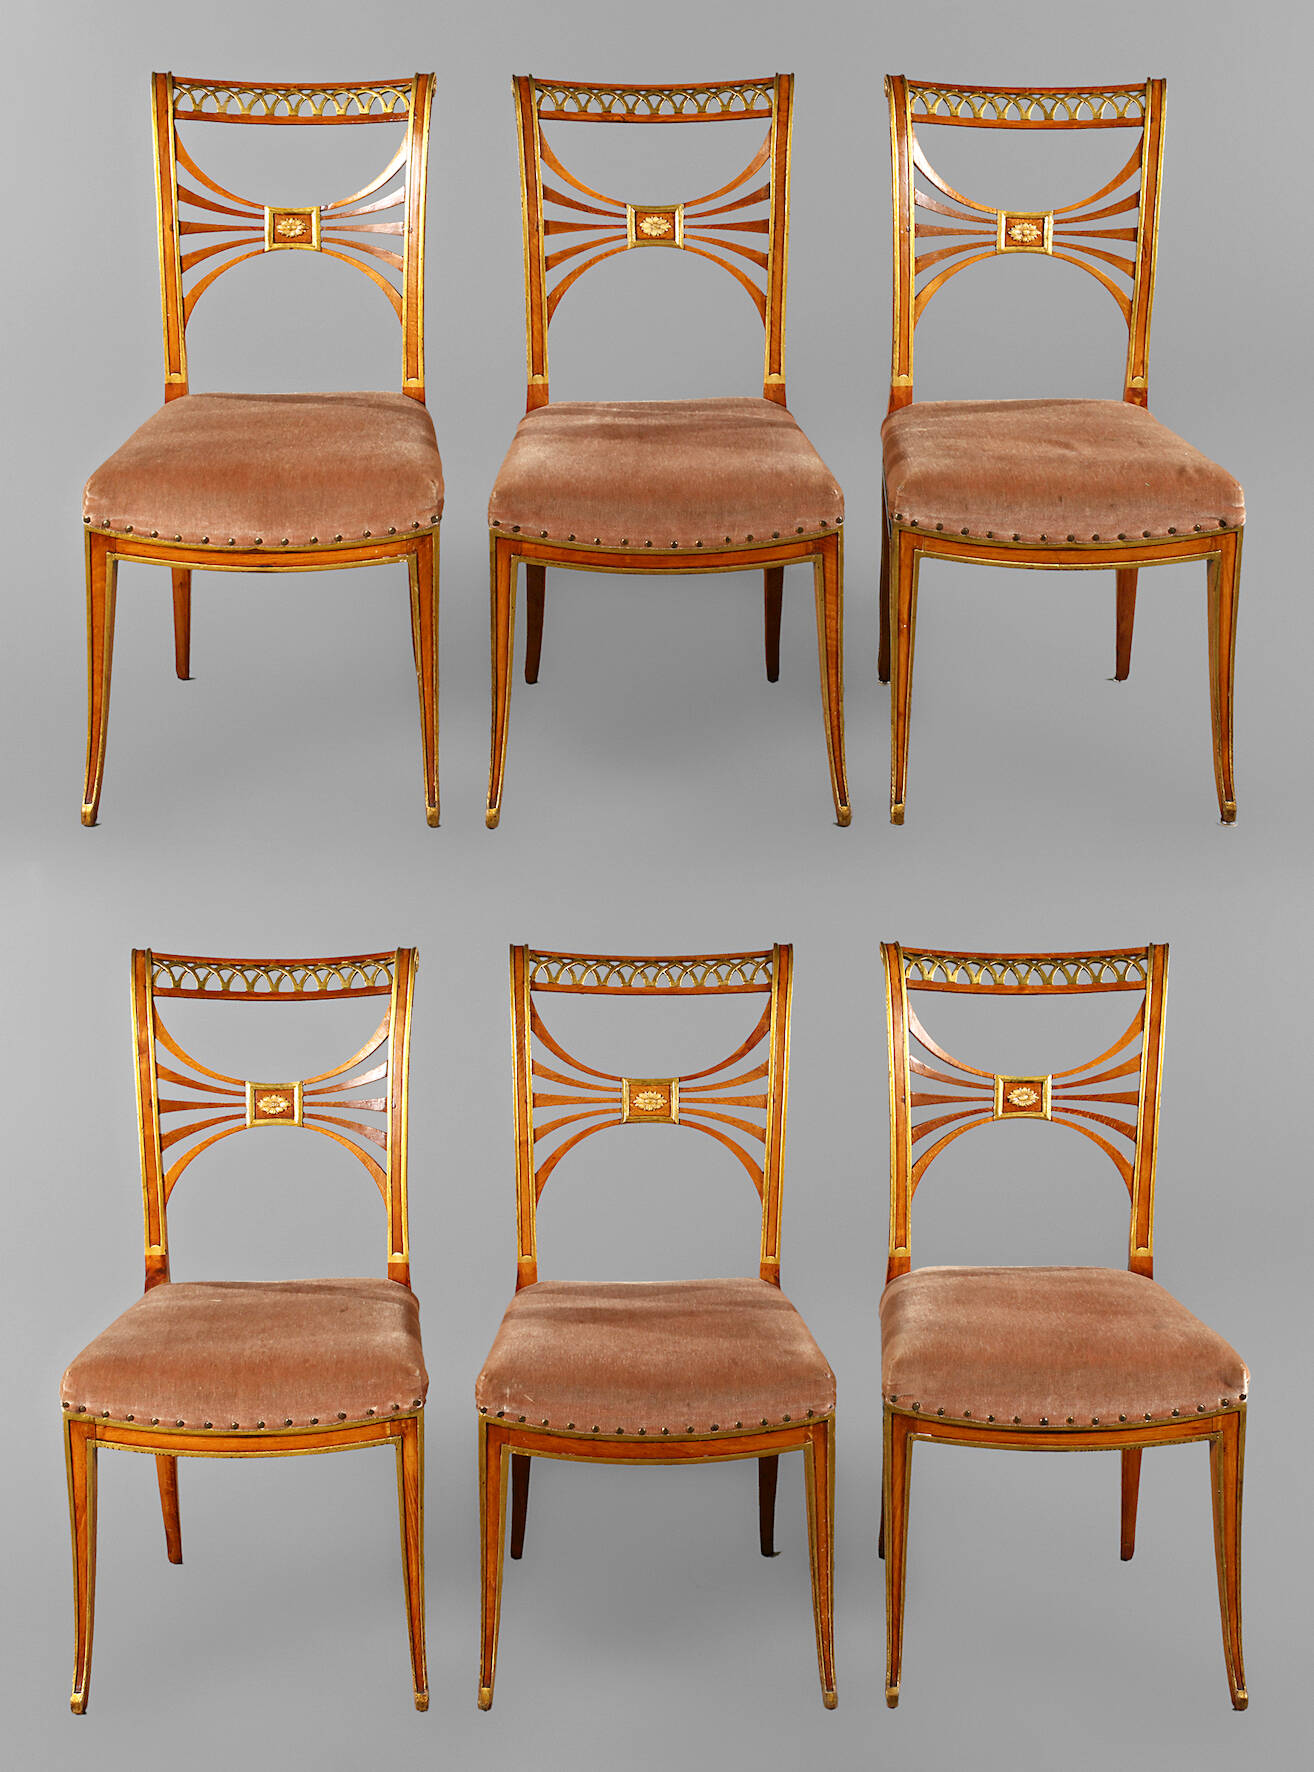 Sechs klassizistische Stühle